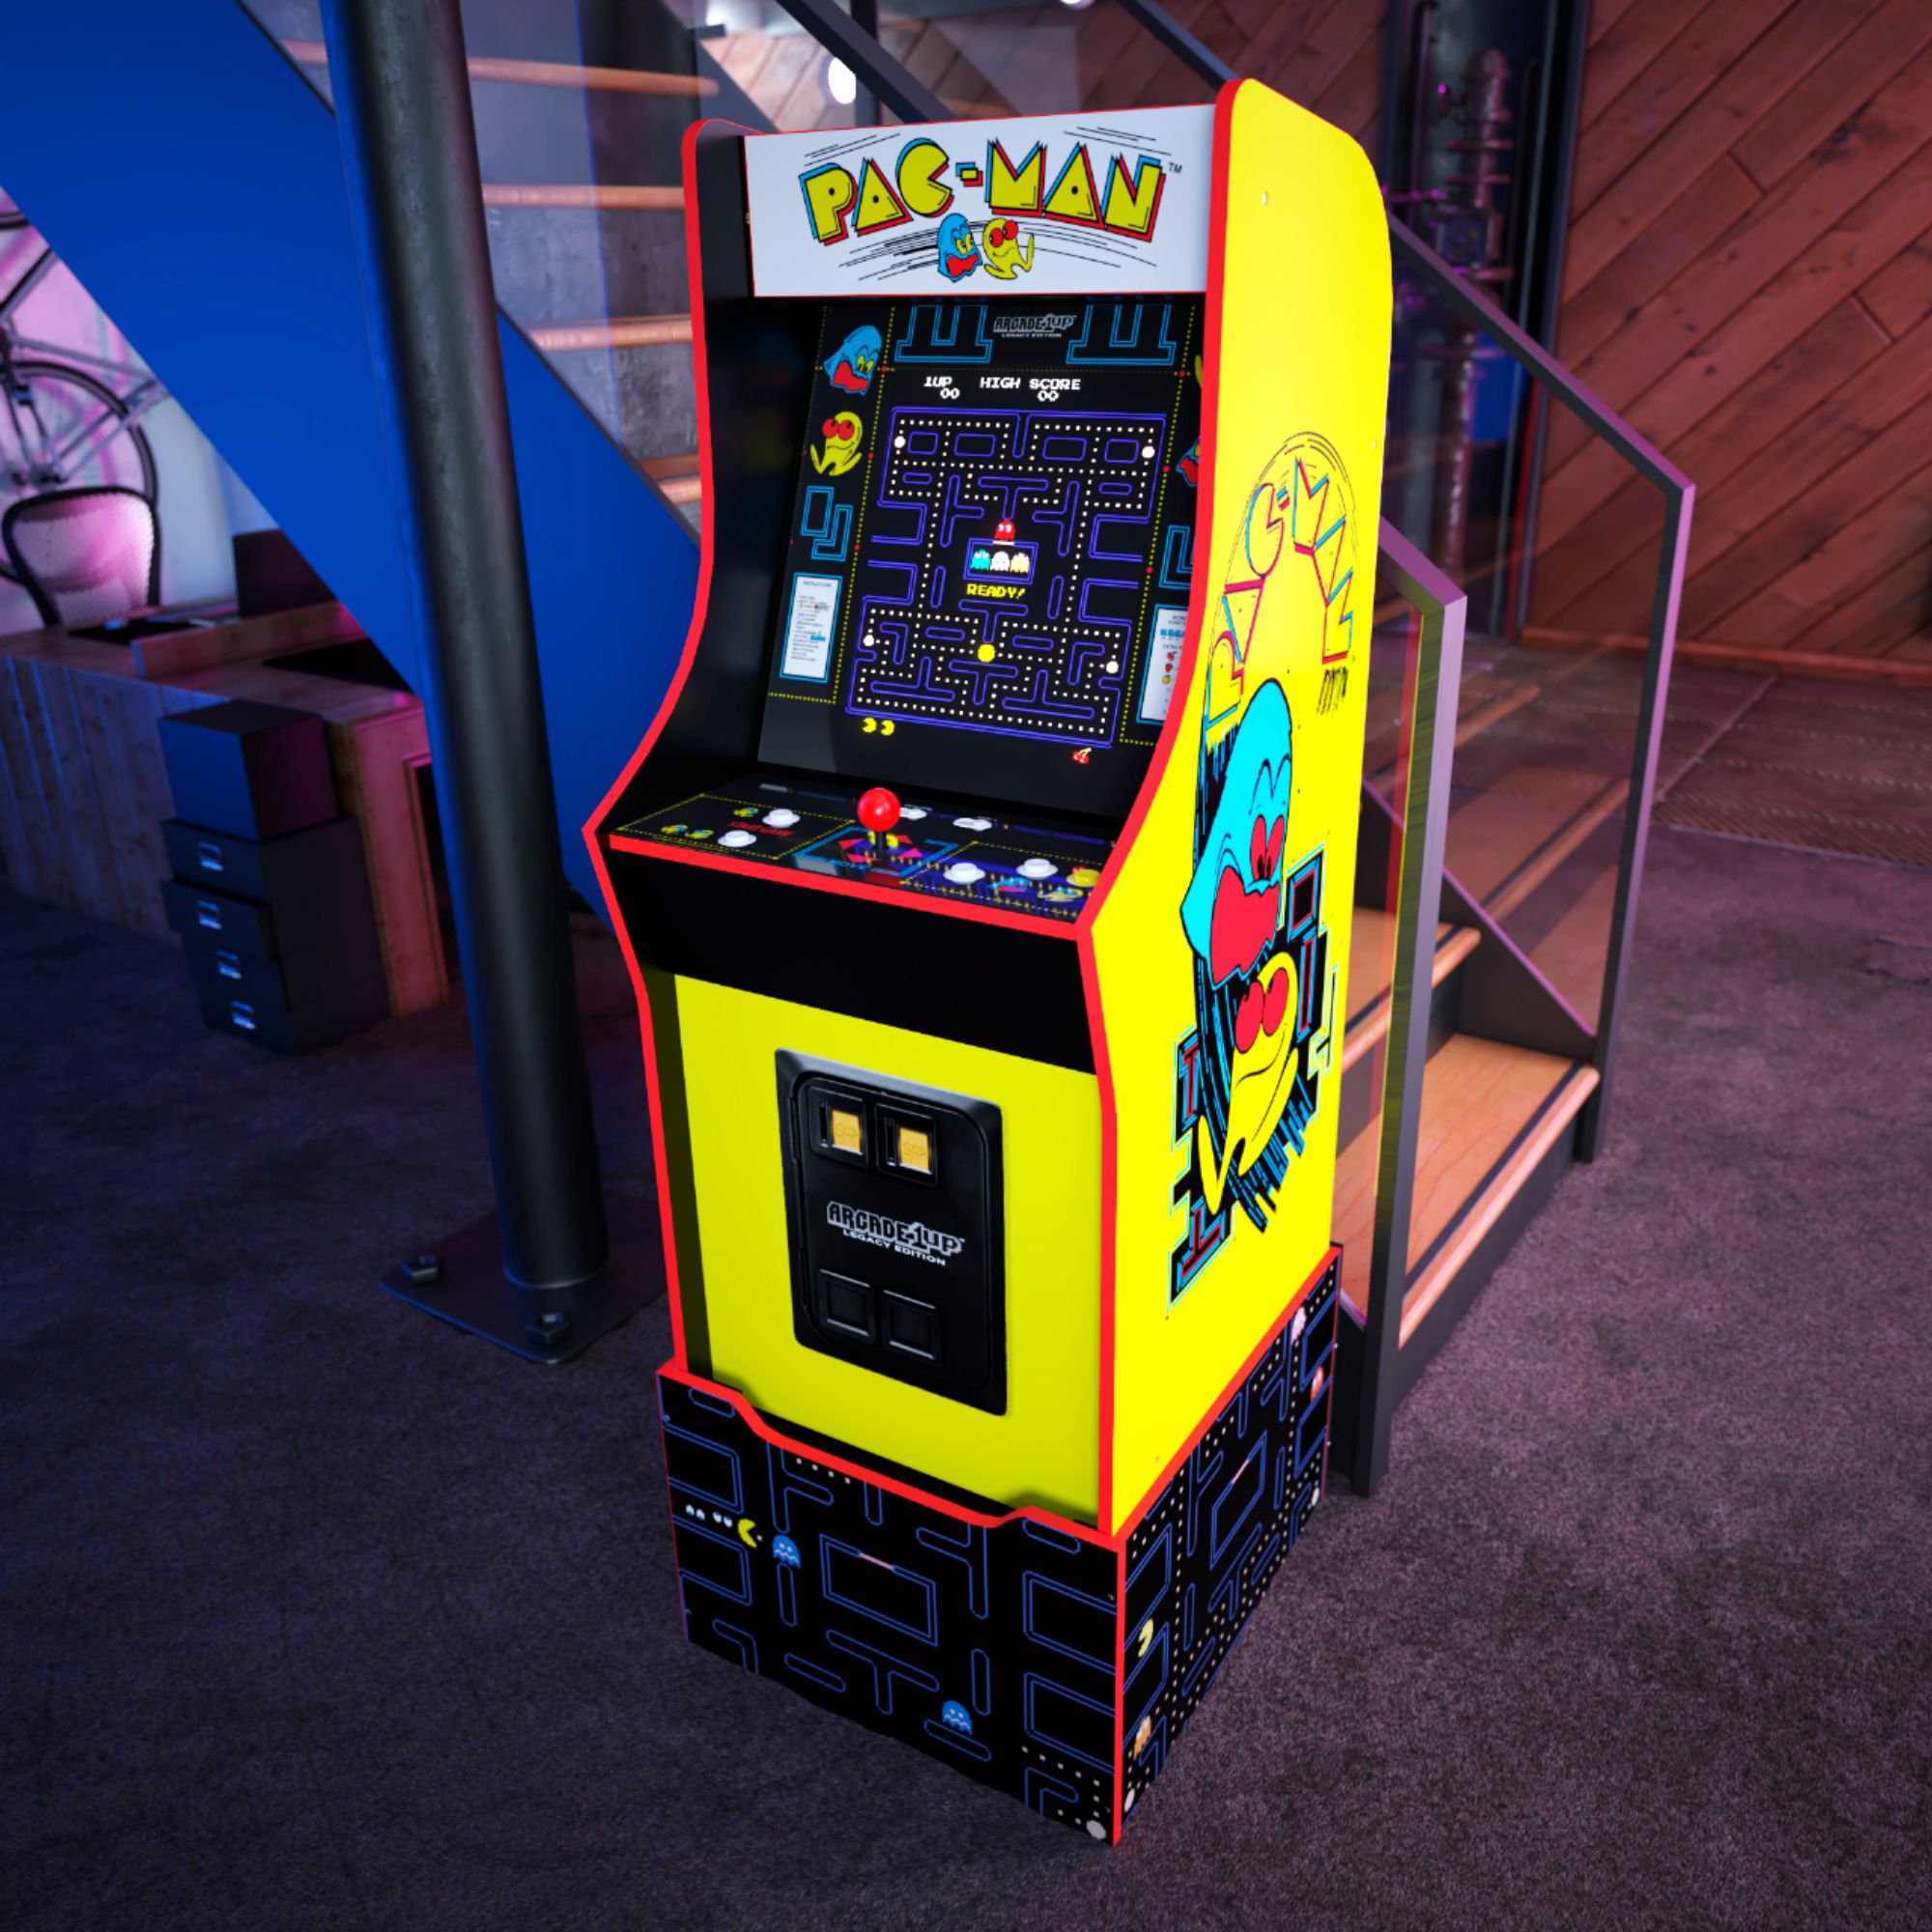 arcade1up-pac-man-legacy-12-in-1-arcade-best-buy